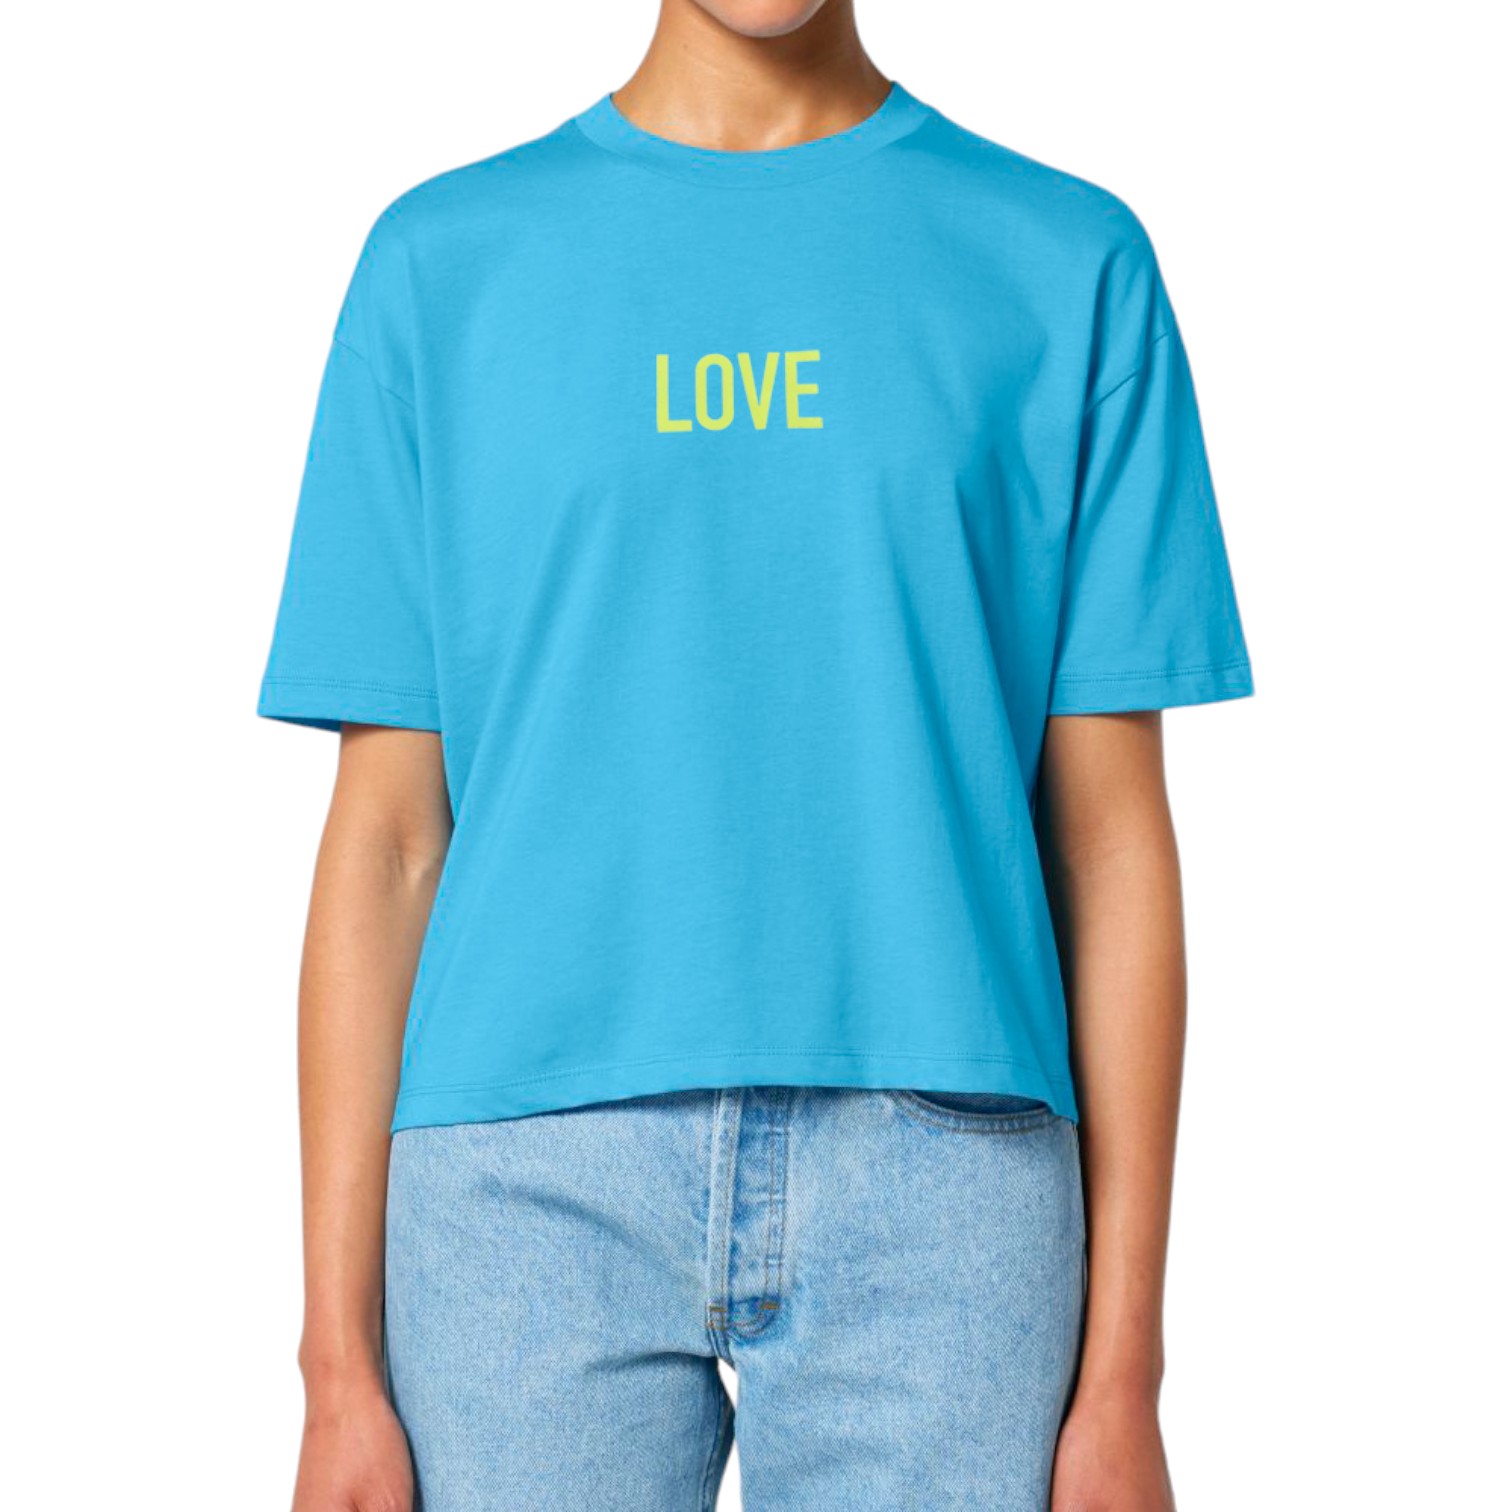 Boxy T-Shirt Love BRLN blau/gelb